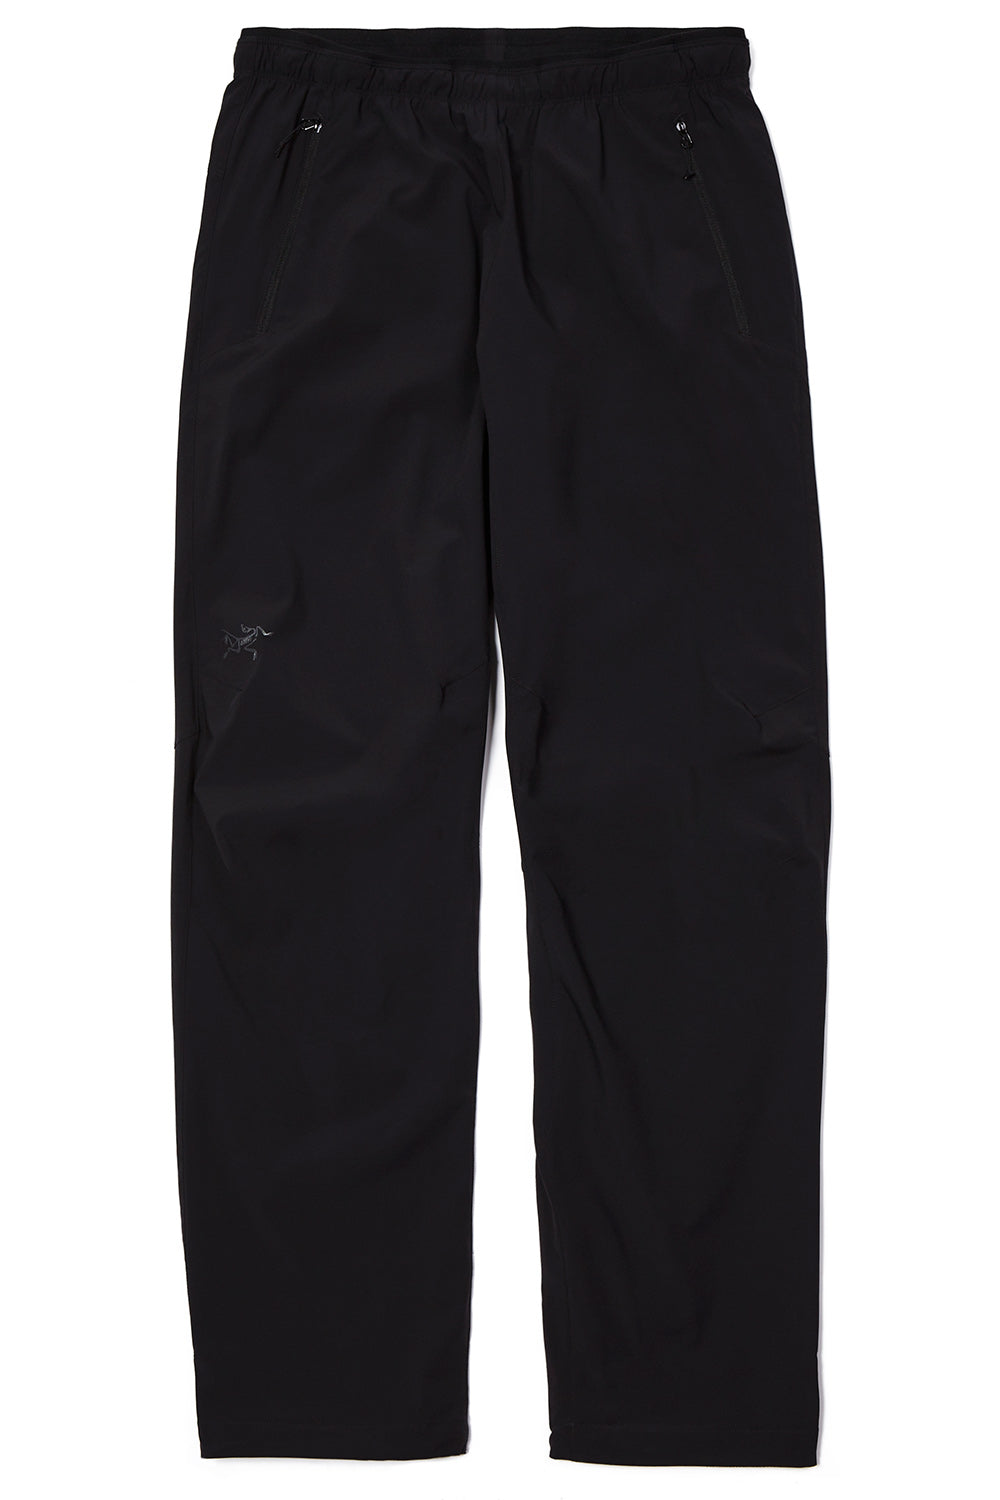 Arc'teryx Men's Incendo Pants - Black – Outsiders Store UK